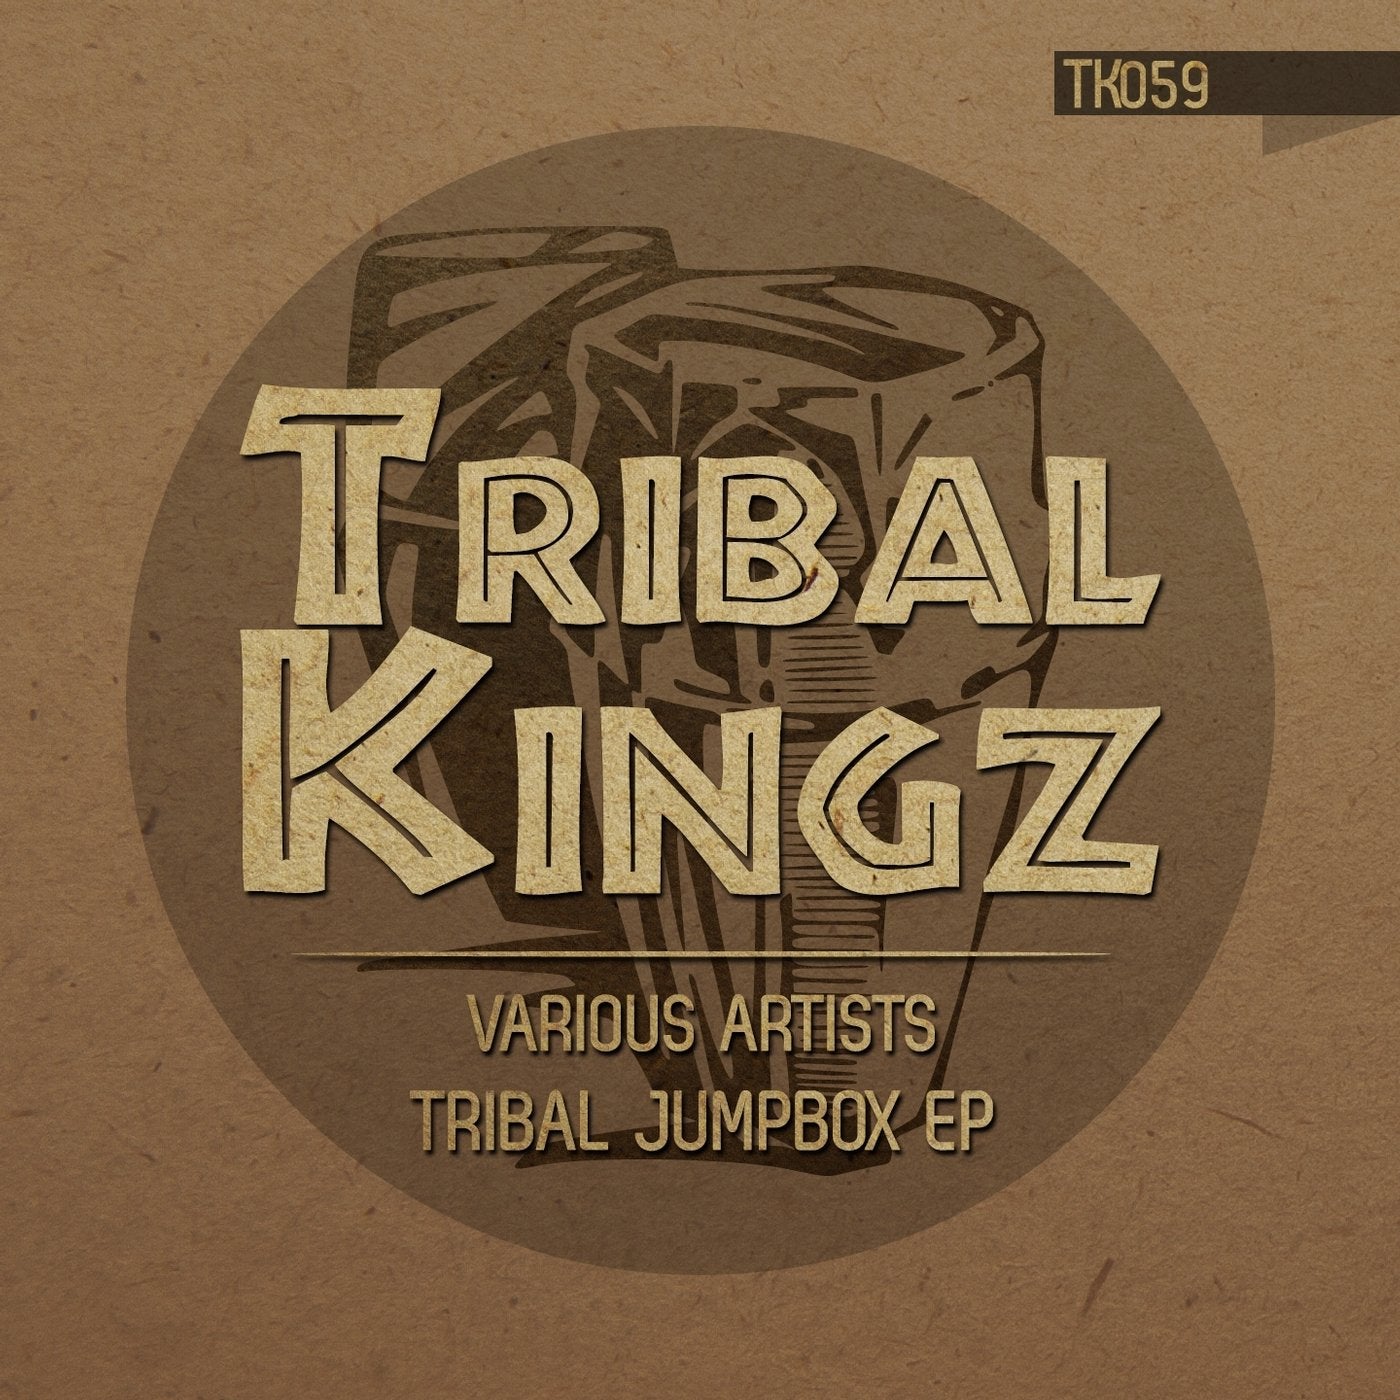 Tribal Jumpbox EP